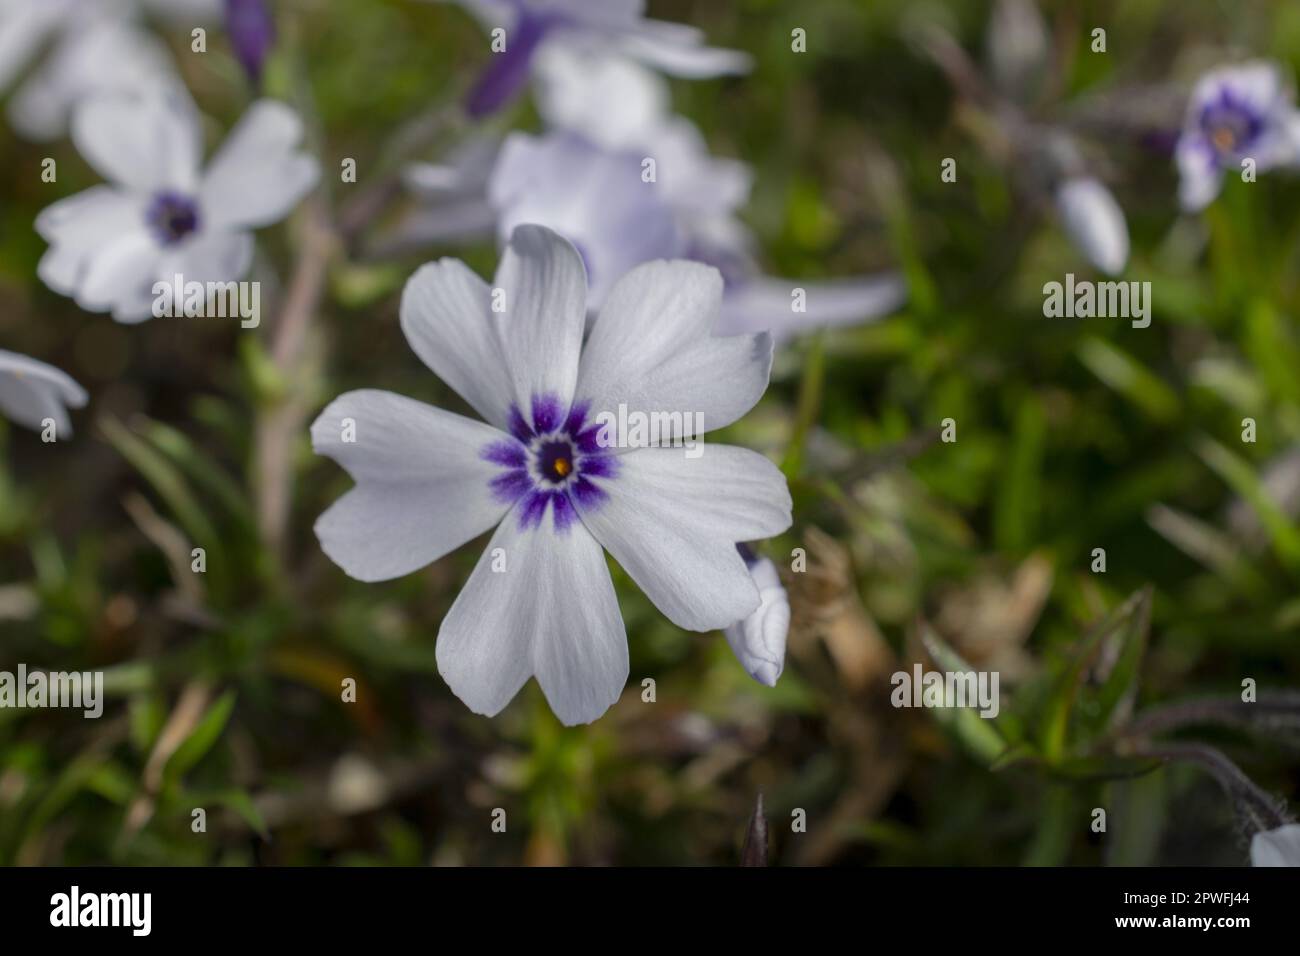 White with a blue eye moss phlox Bavaria. Stock Photo